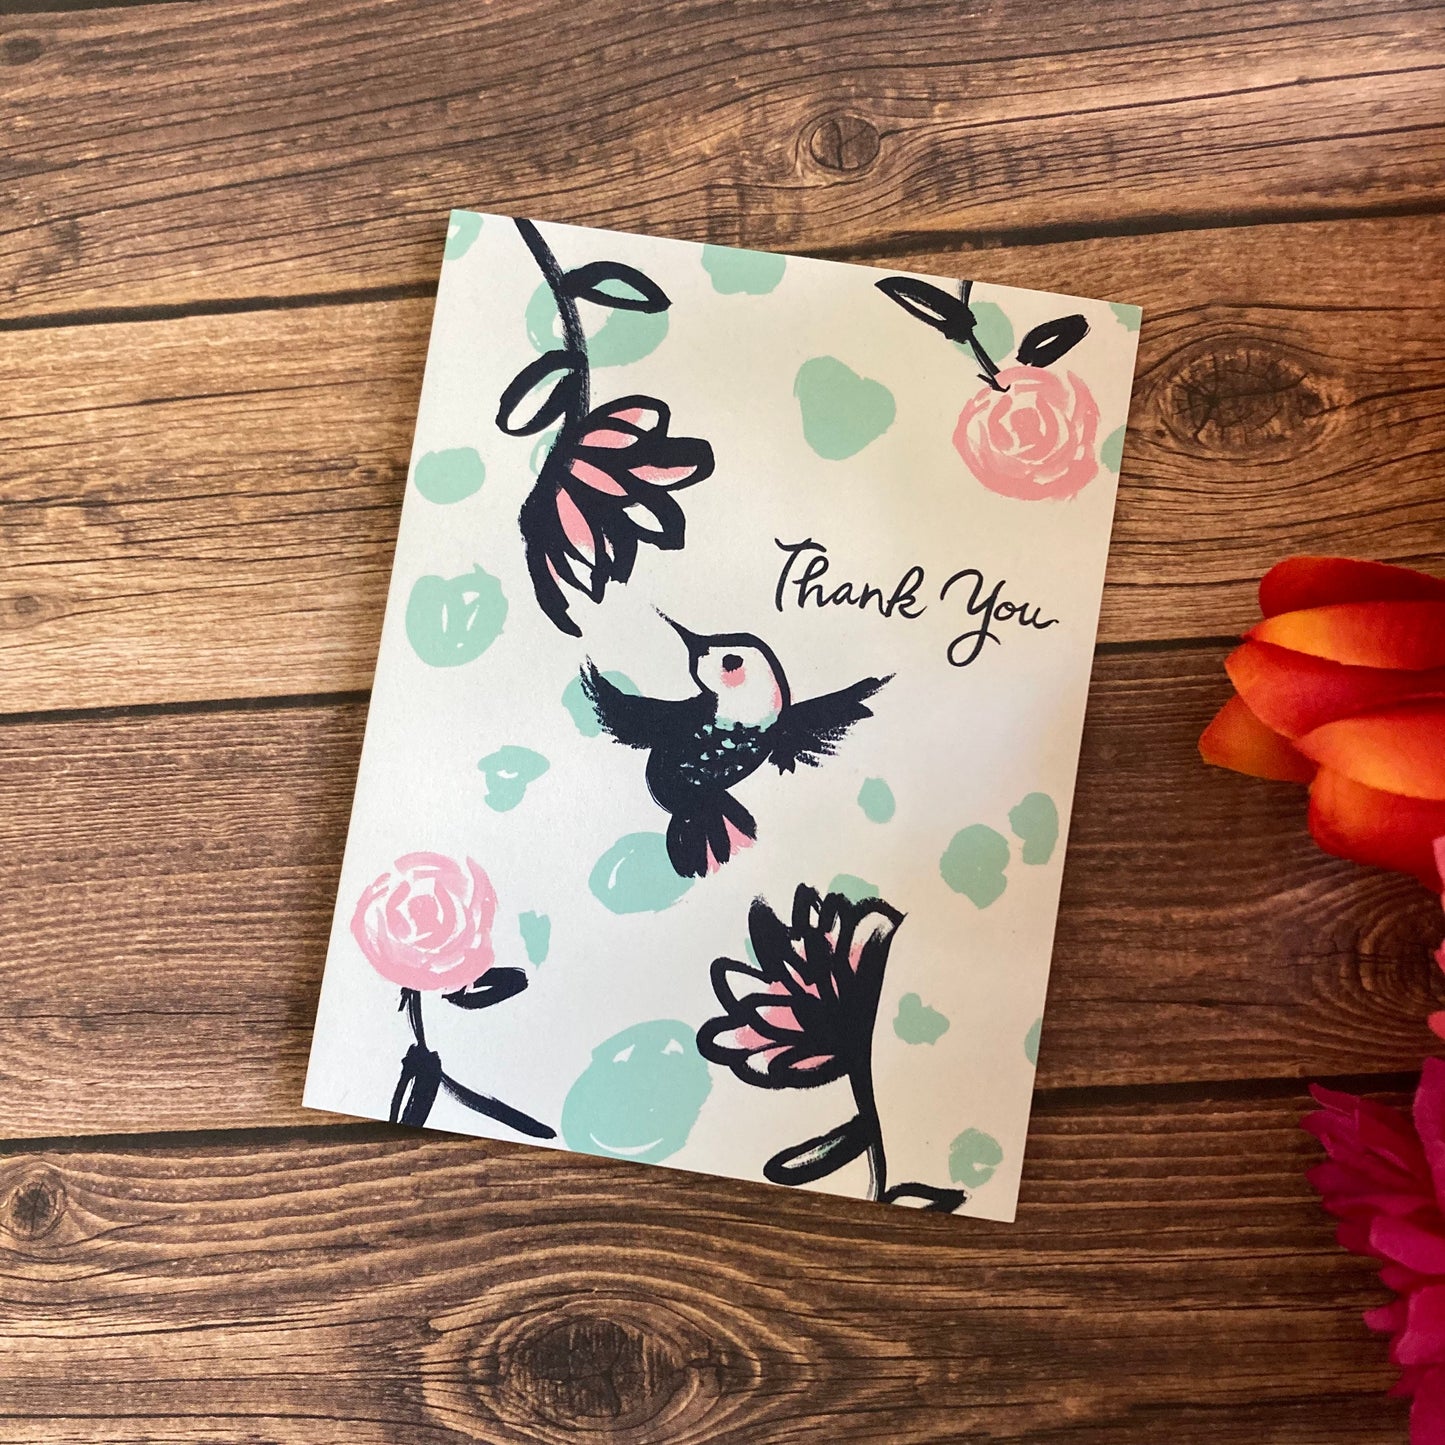 THANKS - Navy and Pink Hummingbird Notecard - appreciation, gratitude, Eco-Friendly Notecards by Adriana Bergstrom (Adriprints)